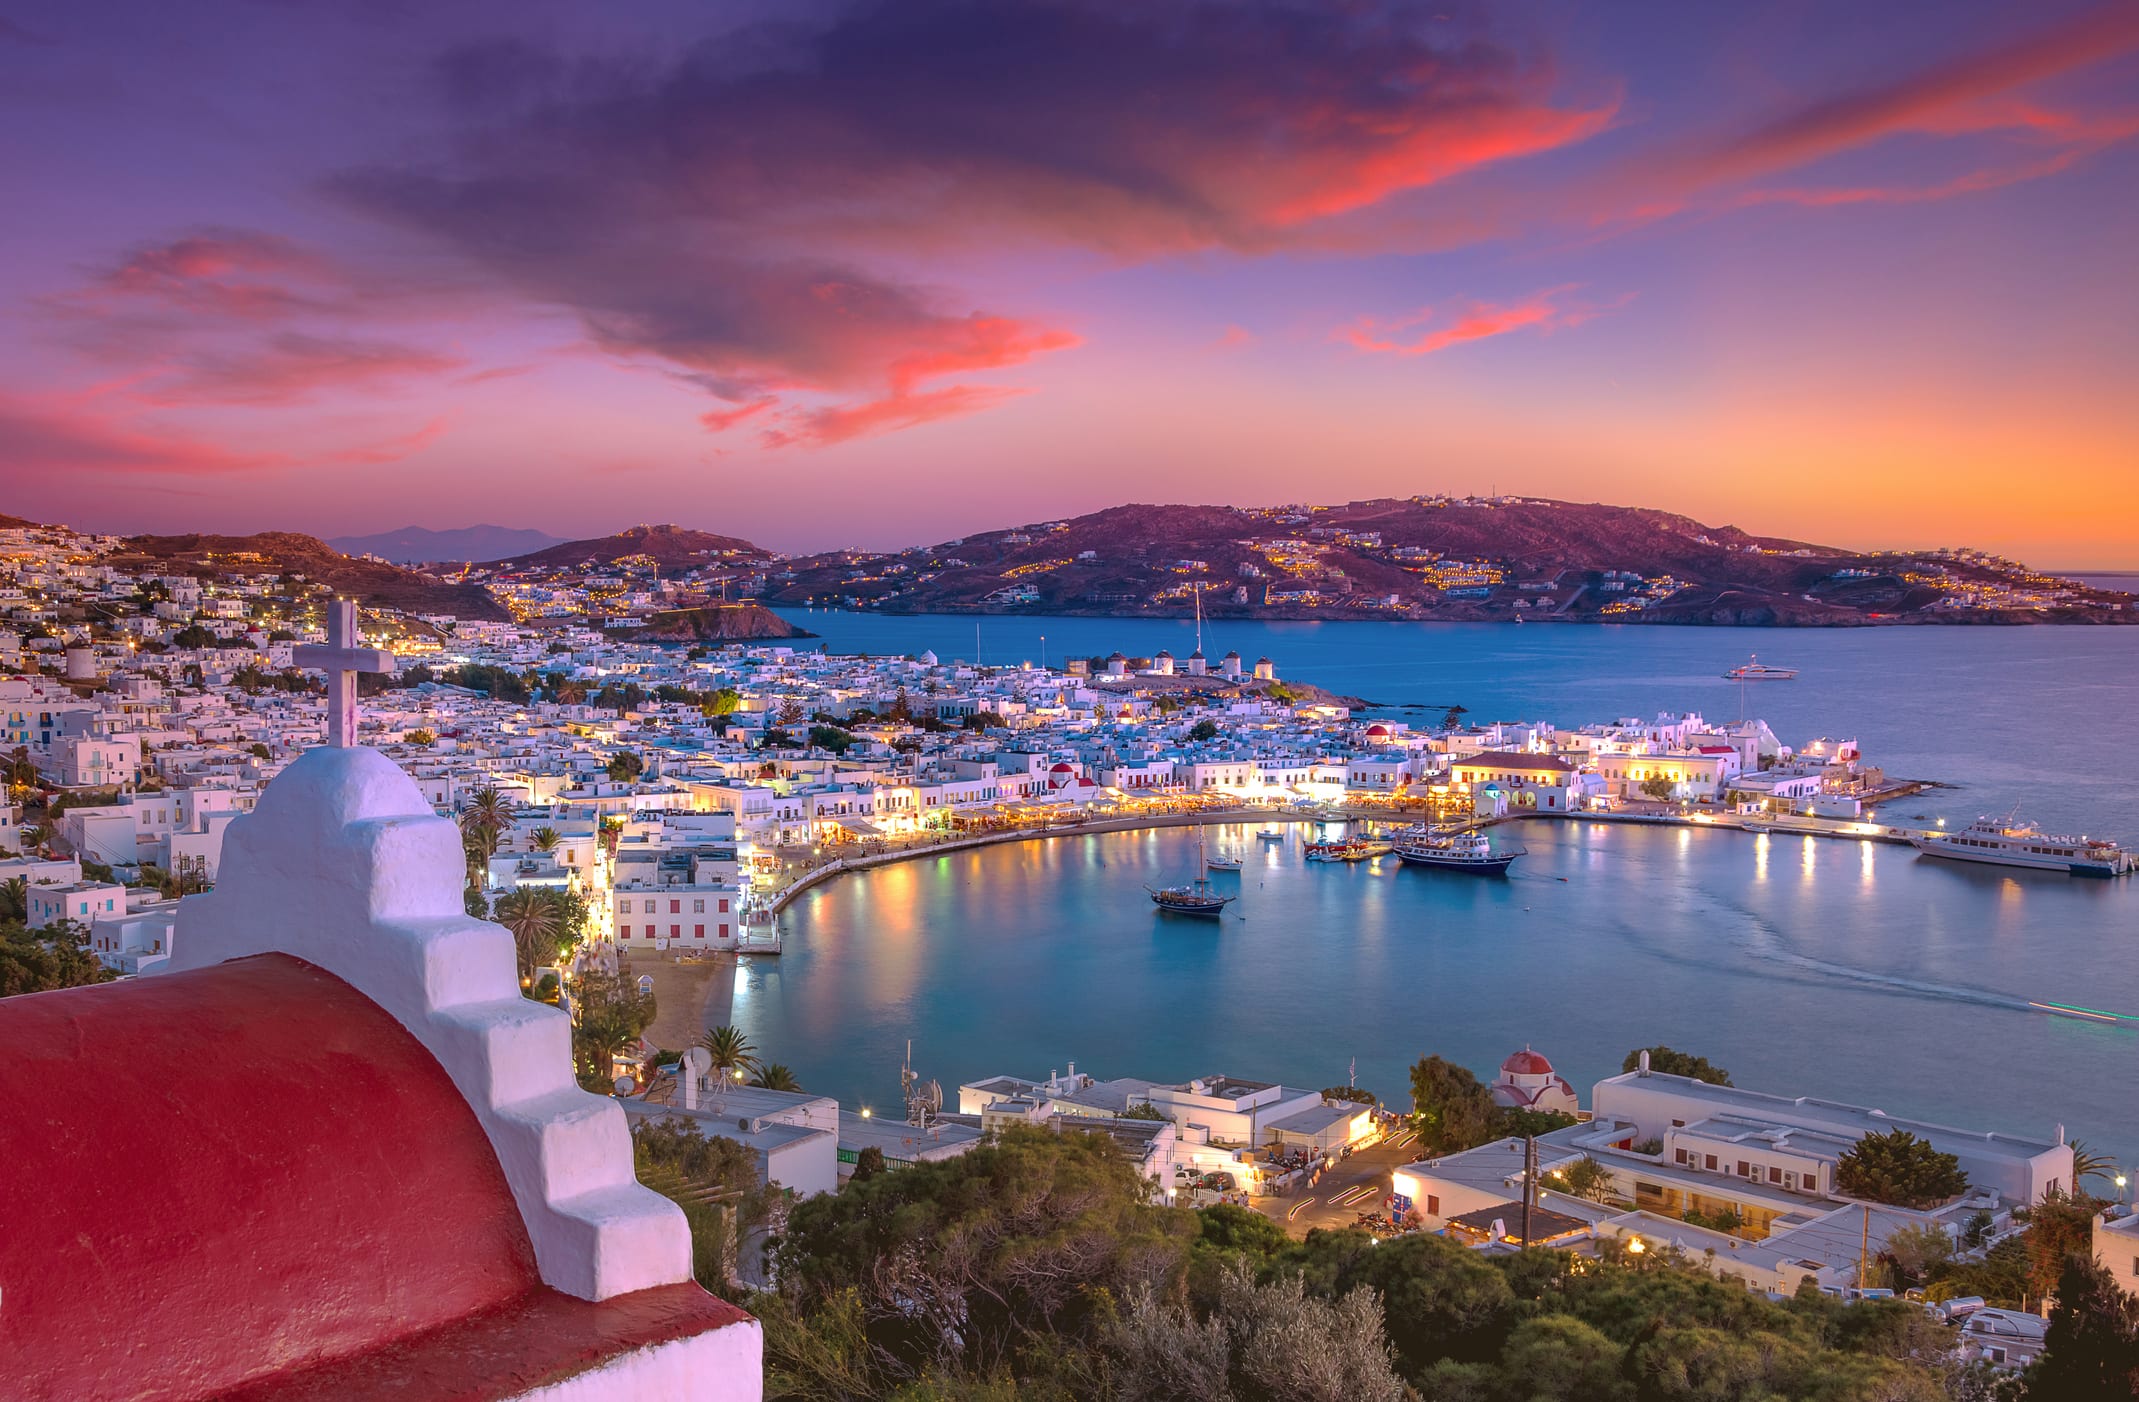 How to Get to Santorini Island, Greece from Turkey?